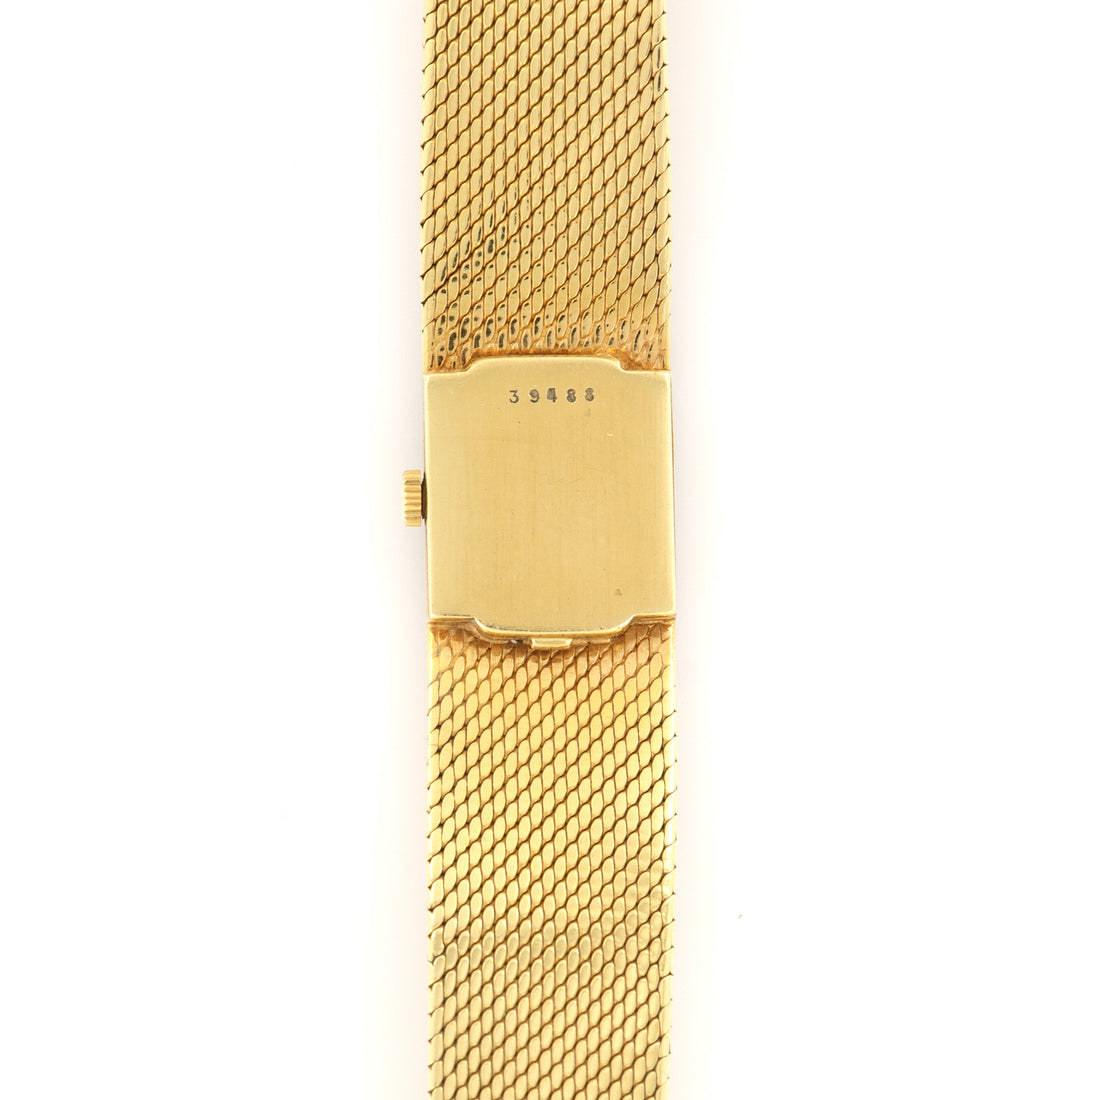 Audemars Piguet Yellow Gold Checkered Bracelet Watch with Original Warranty Paper